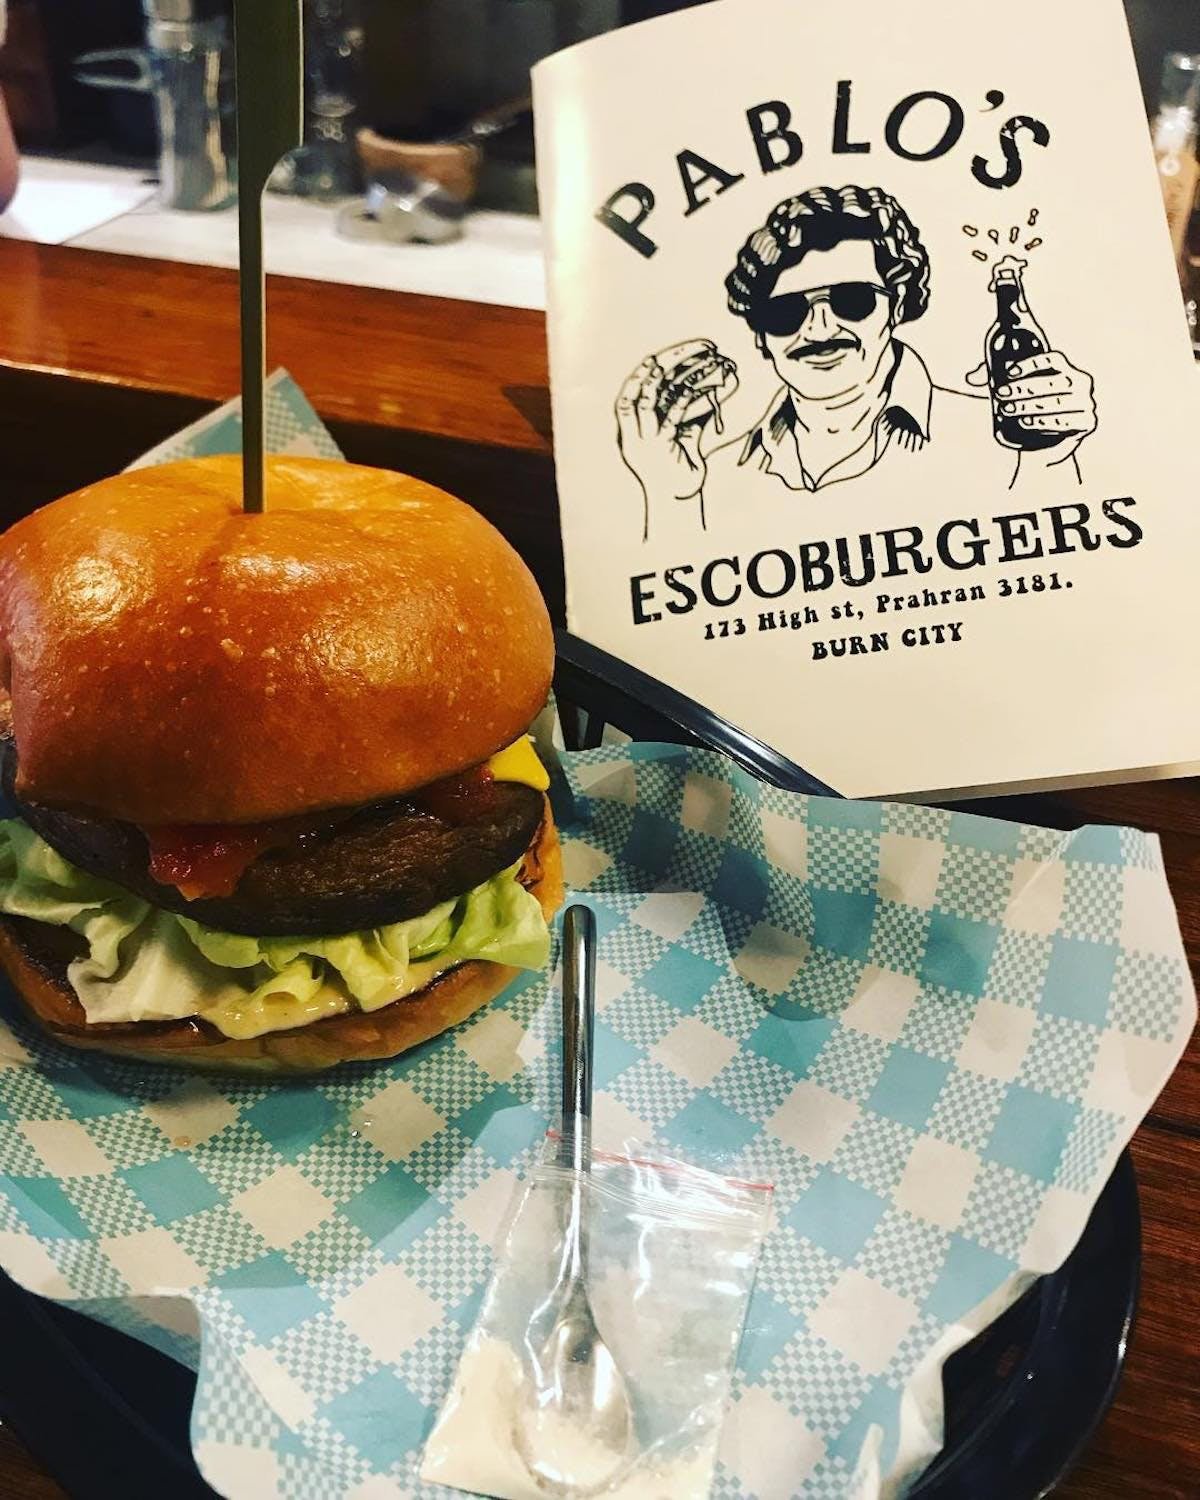 Pablos Escoburgers - Pubs Sydney